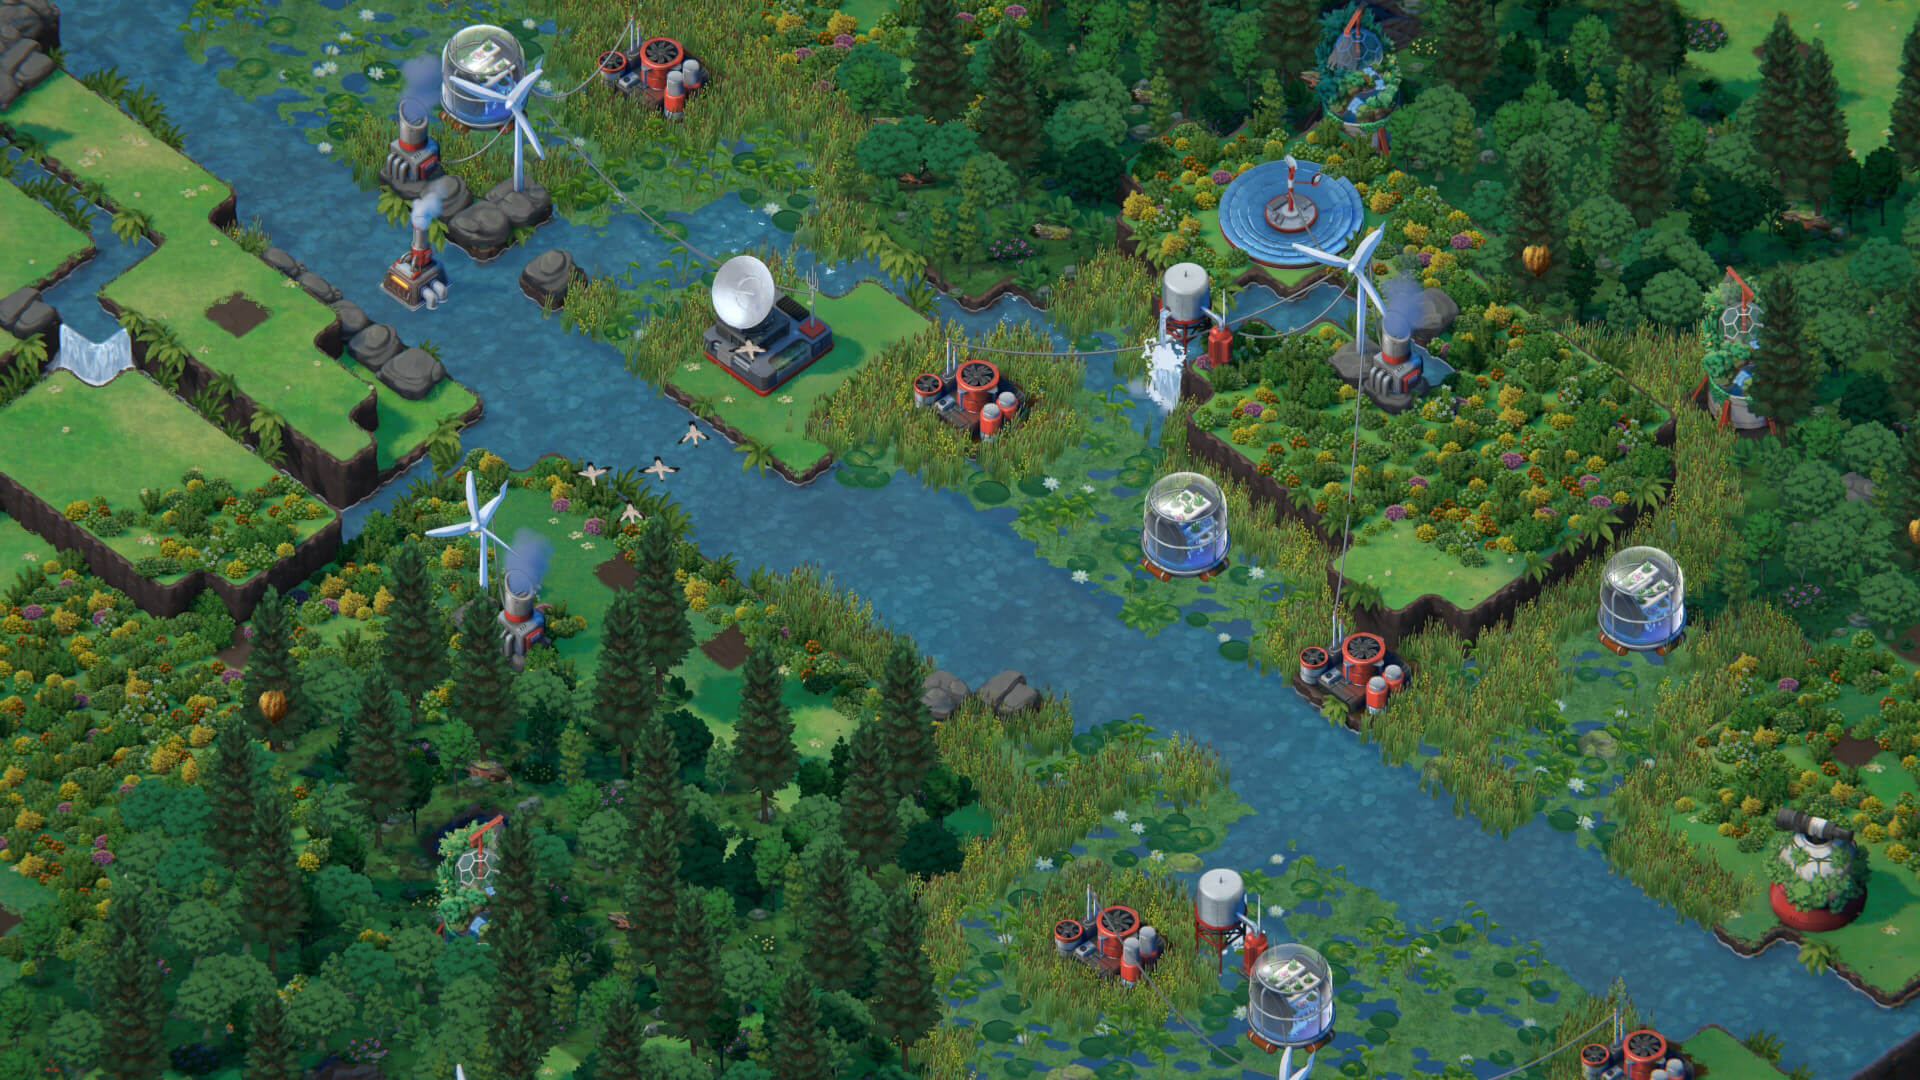 A chill scene in Devolver Digital's "environmental strategy game" Terra Nil